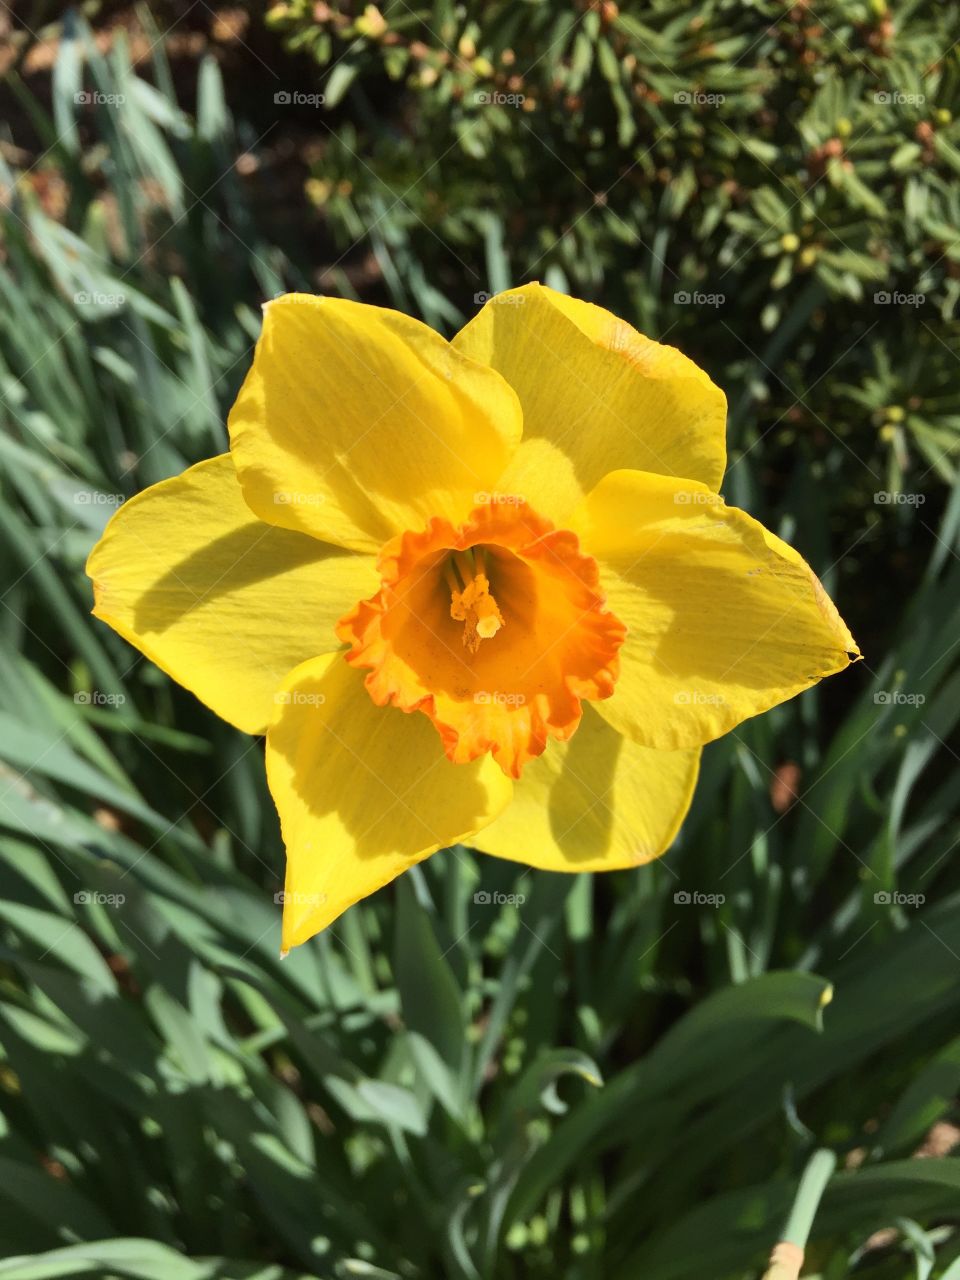 Yellow Flower. A yellow flower